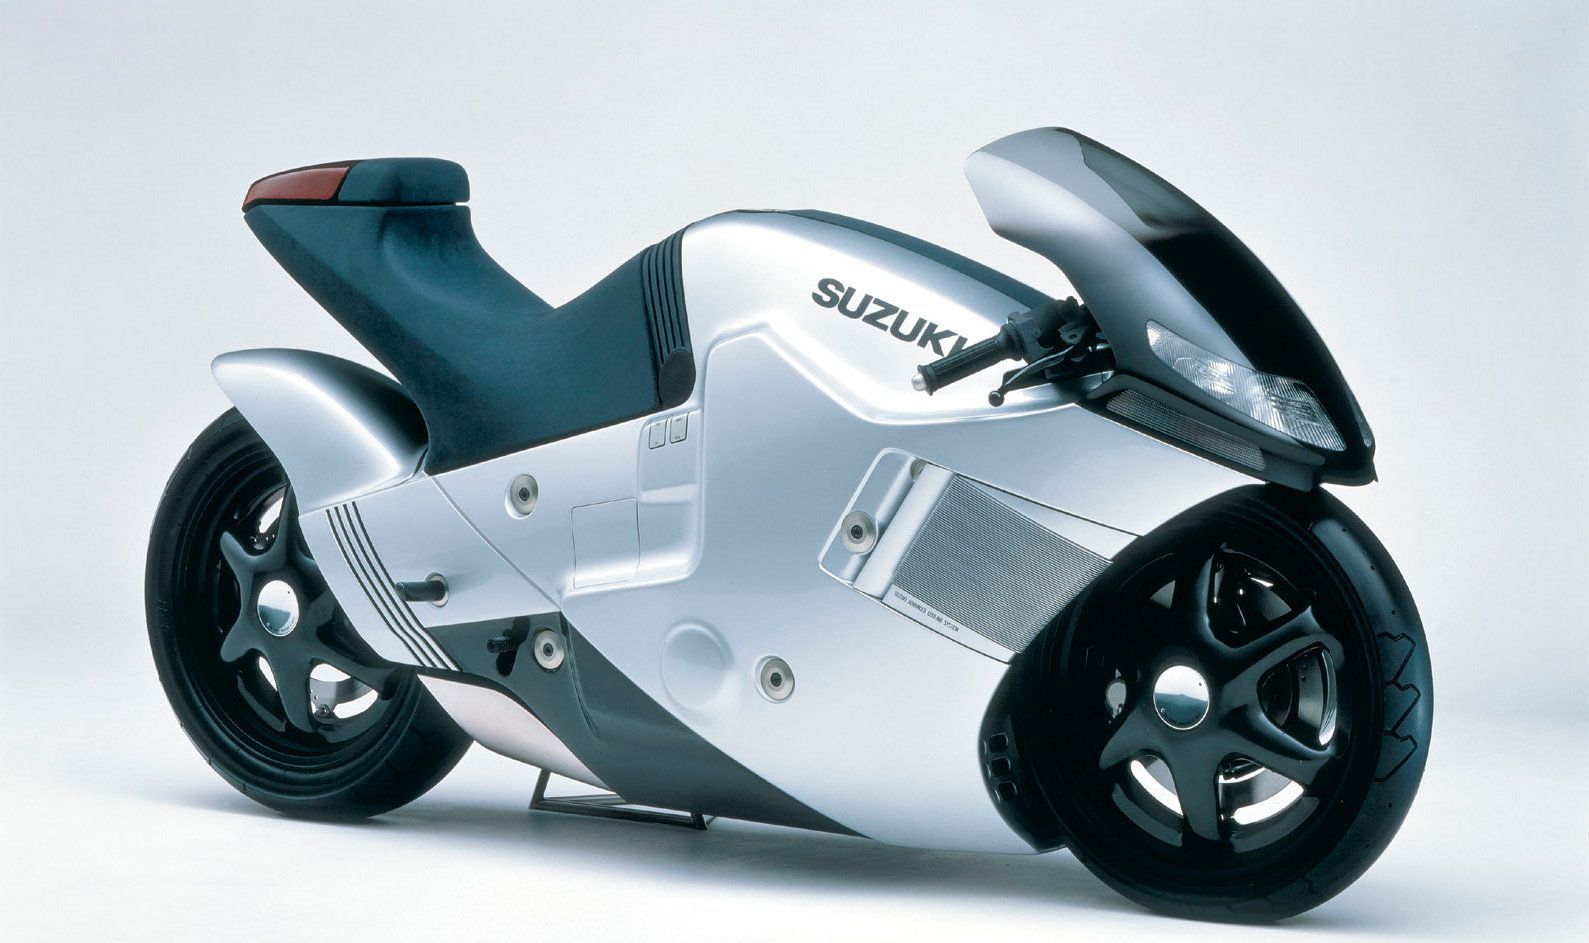 Elektromos motorok a Suzuki-tól